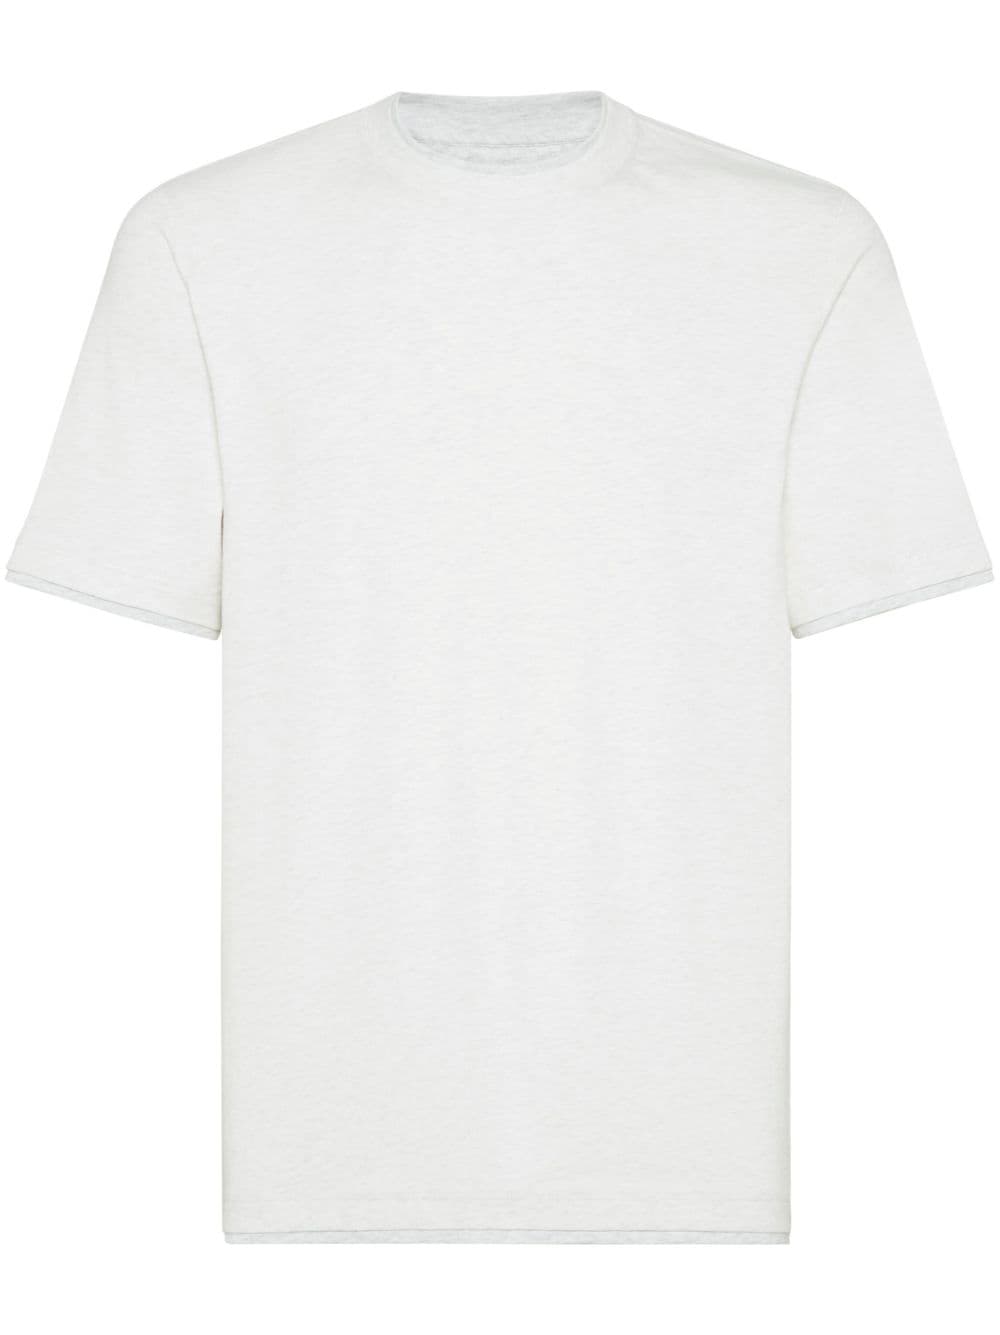 T-shirt grigio perla con logo